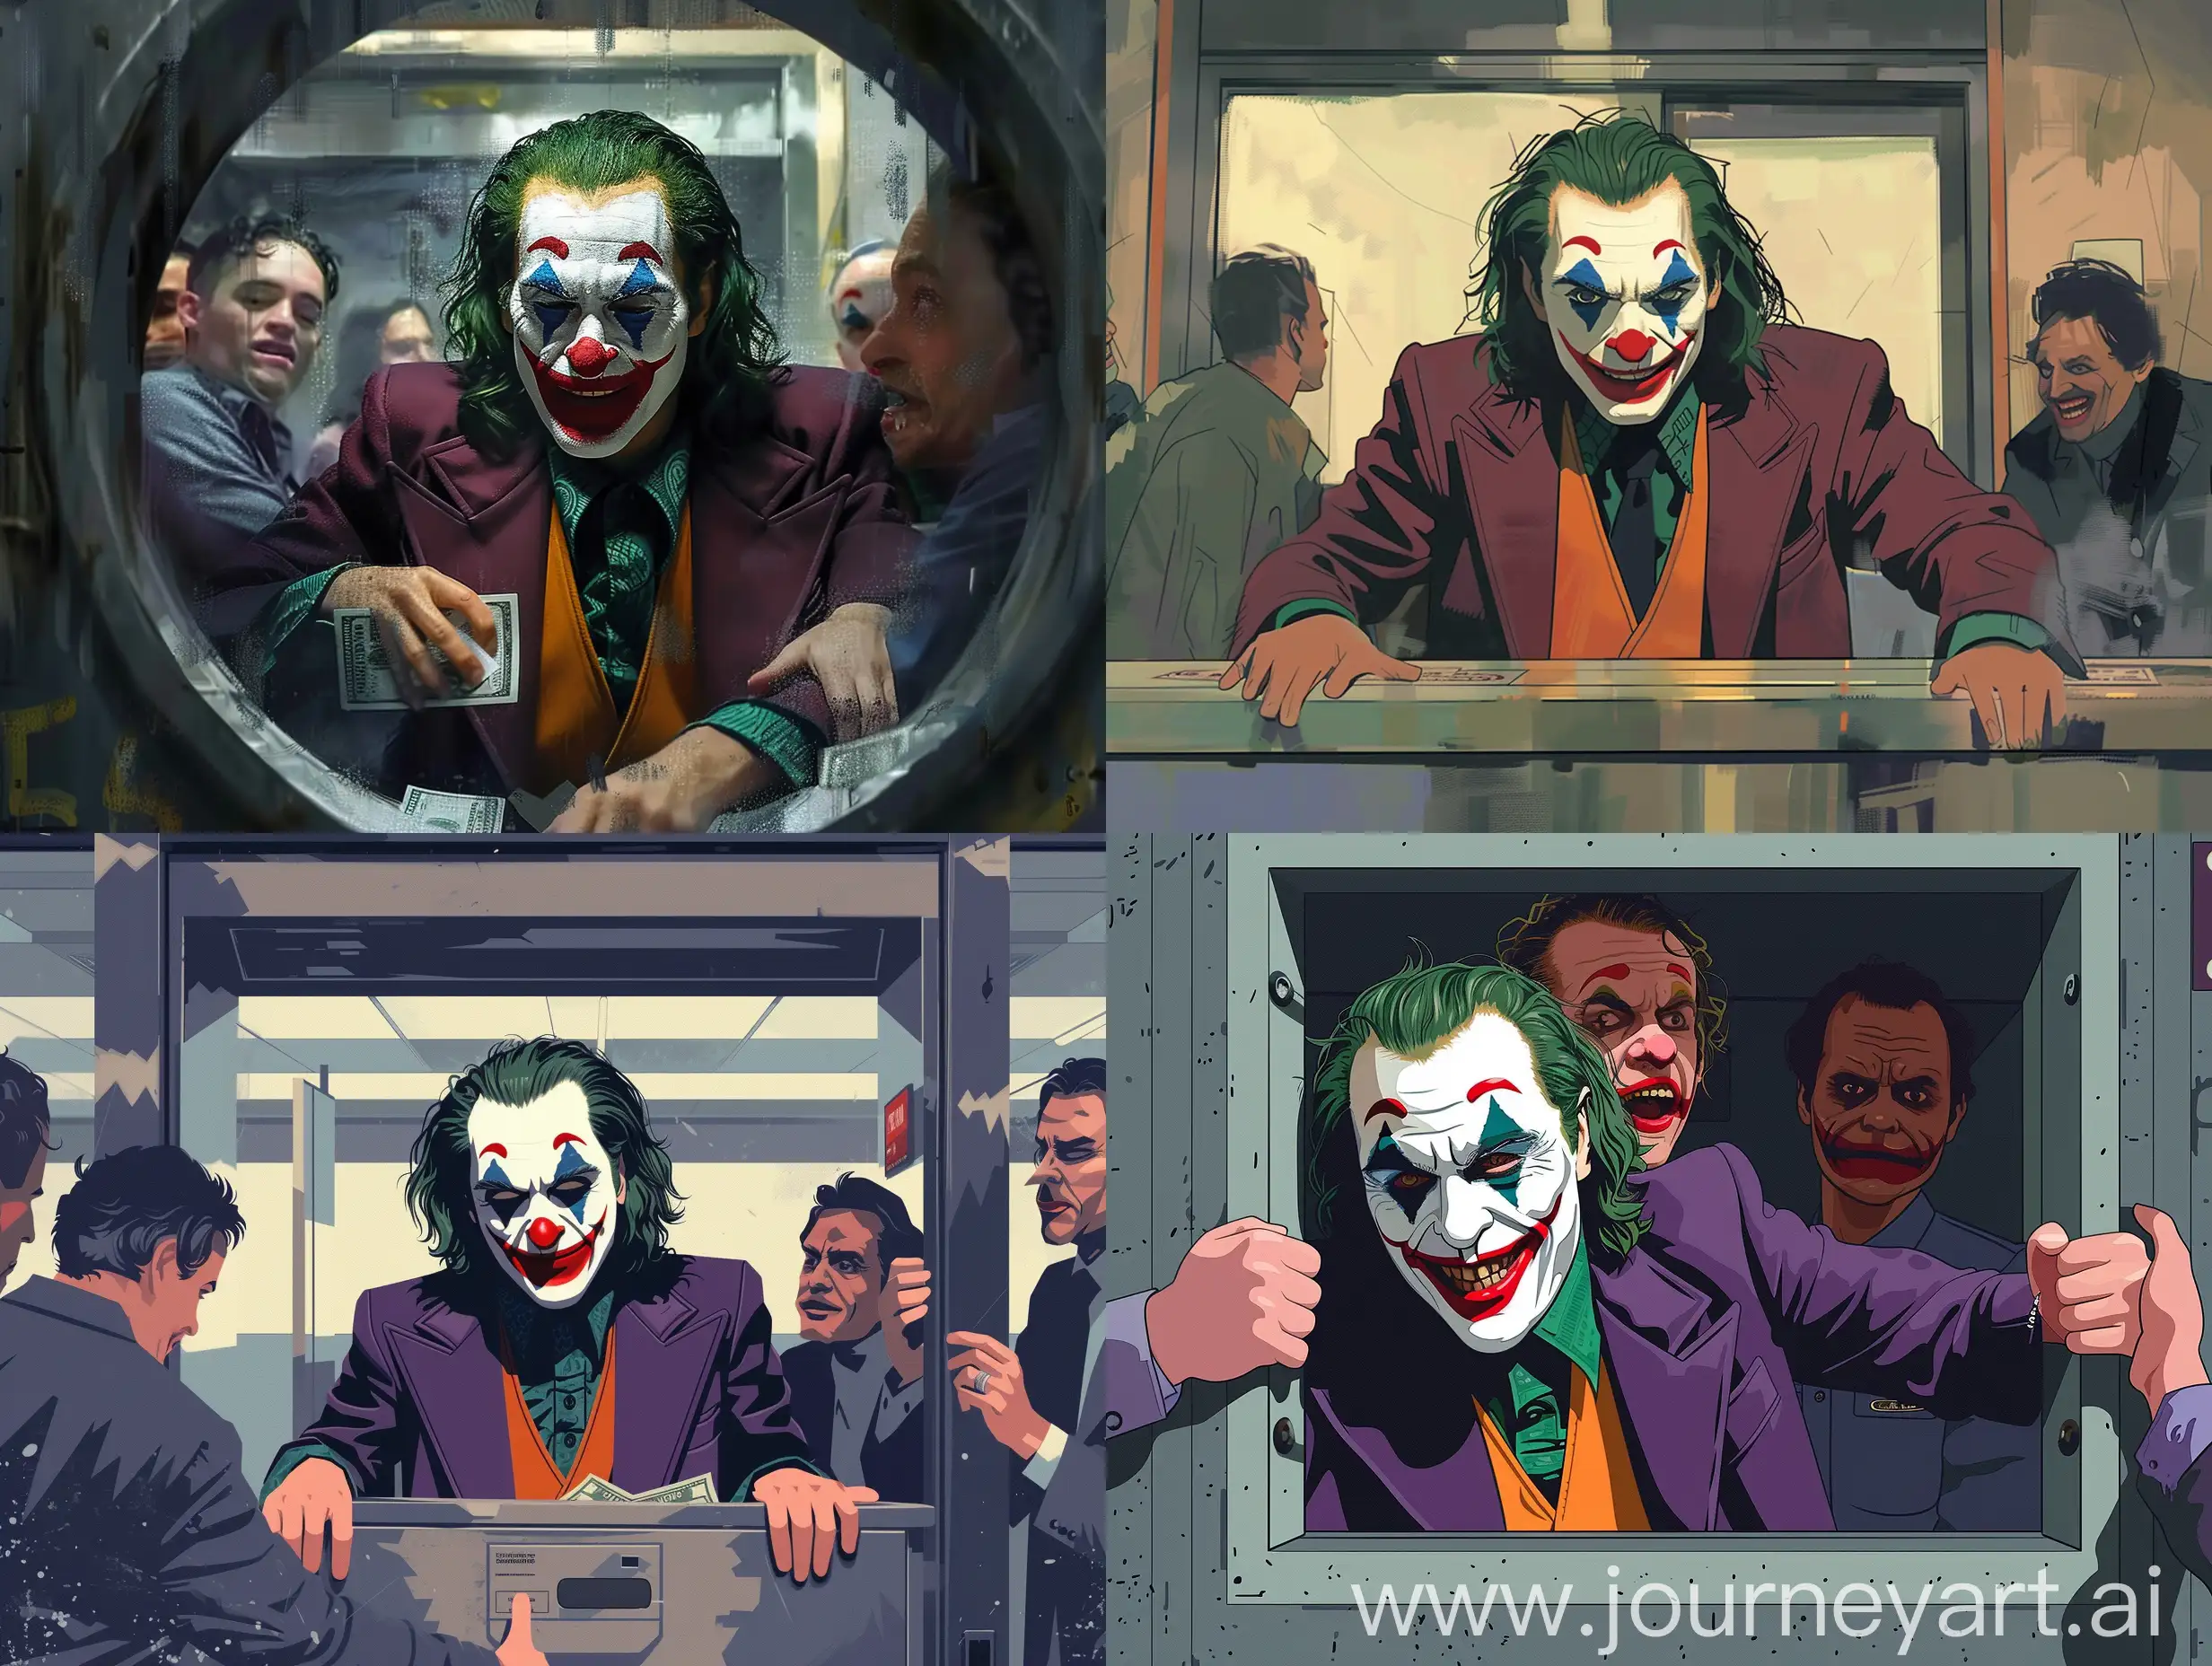 Joker-Attempting-Bank-Heist-with-Staff-in-Panic